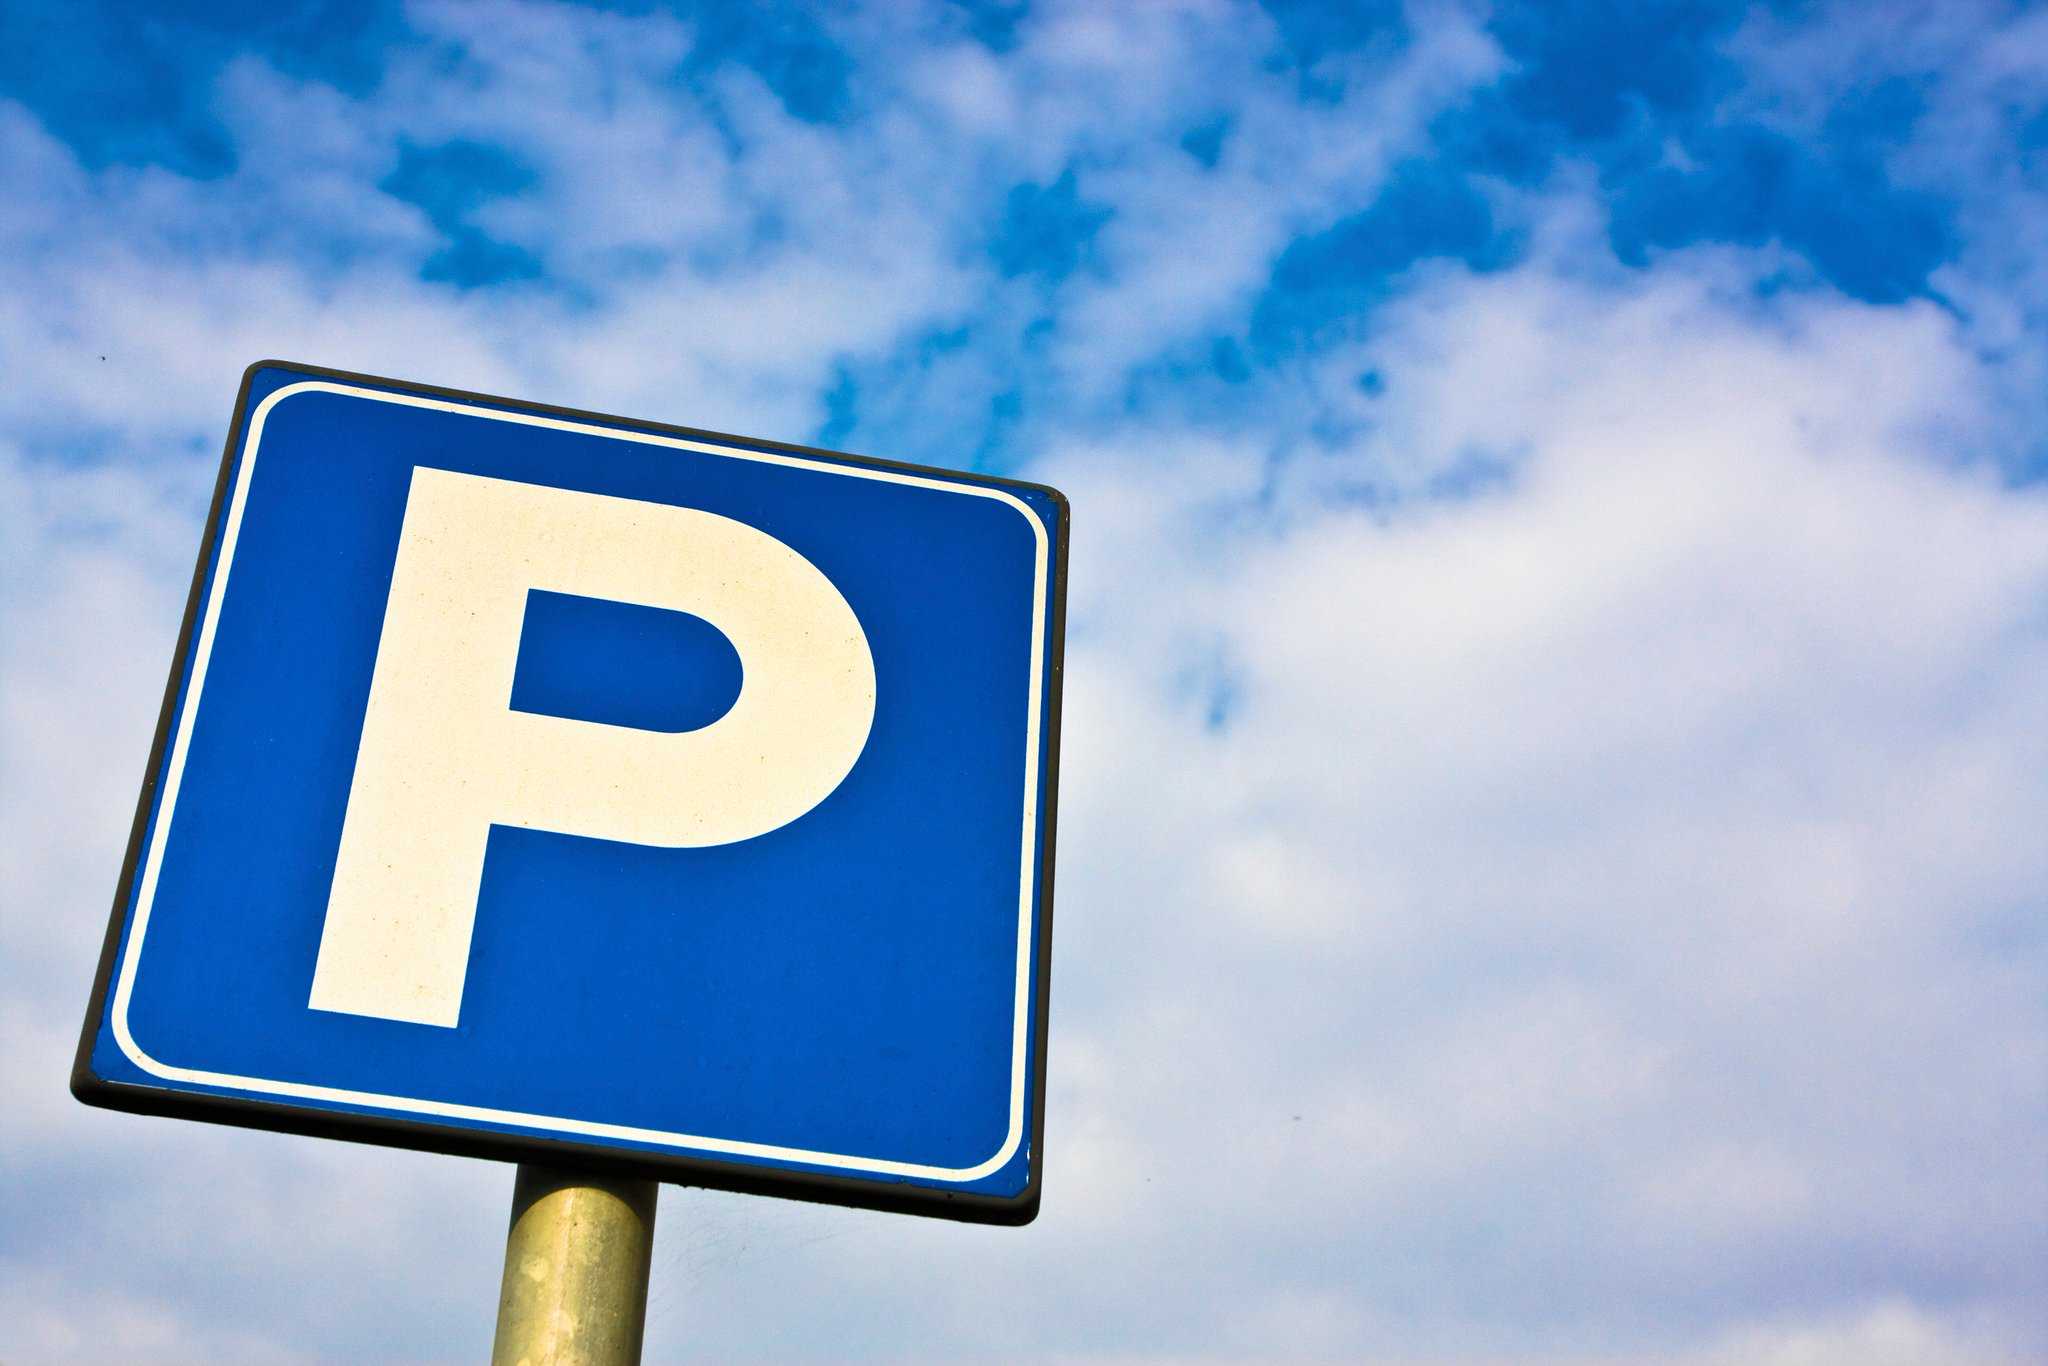 5 Places You Should Never Park Your Vehicle